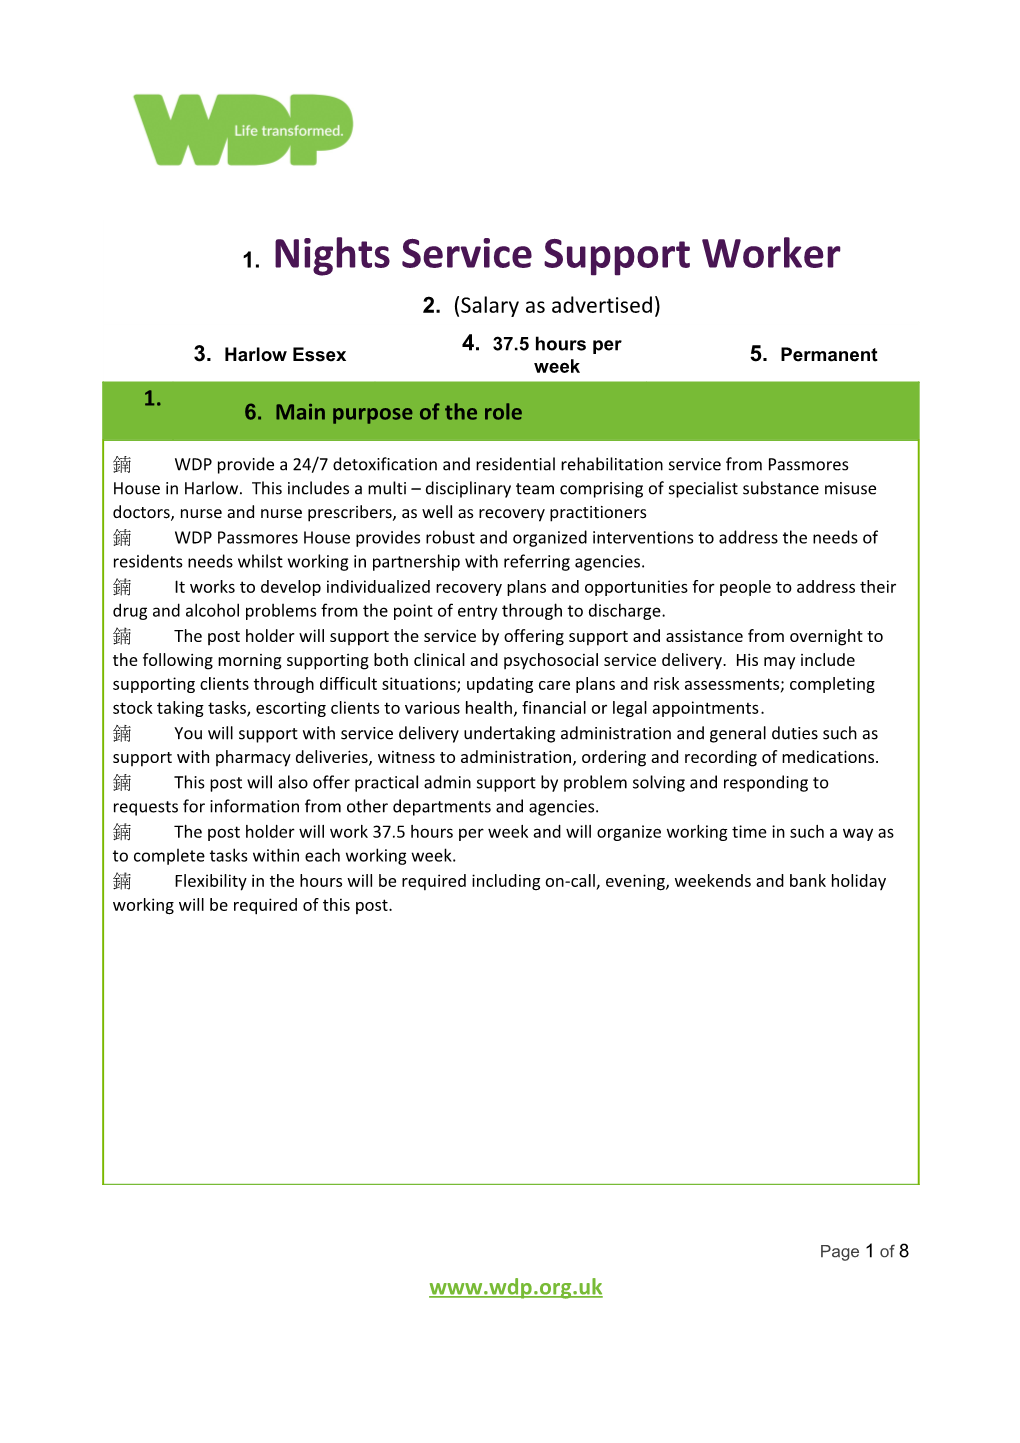 Nights Service Support Worker